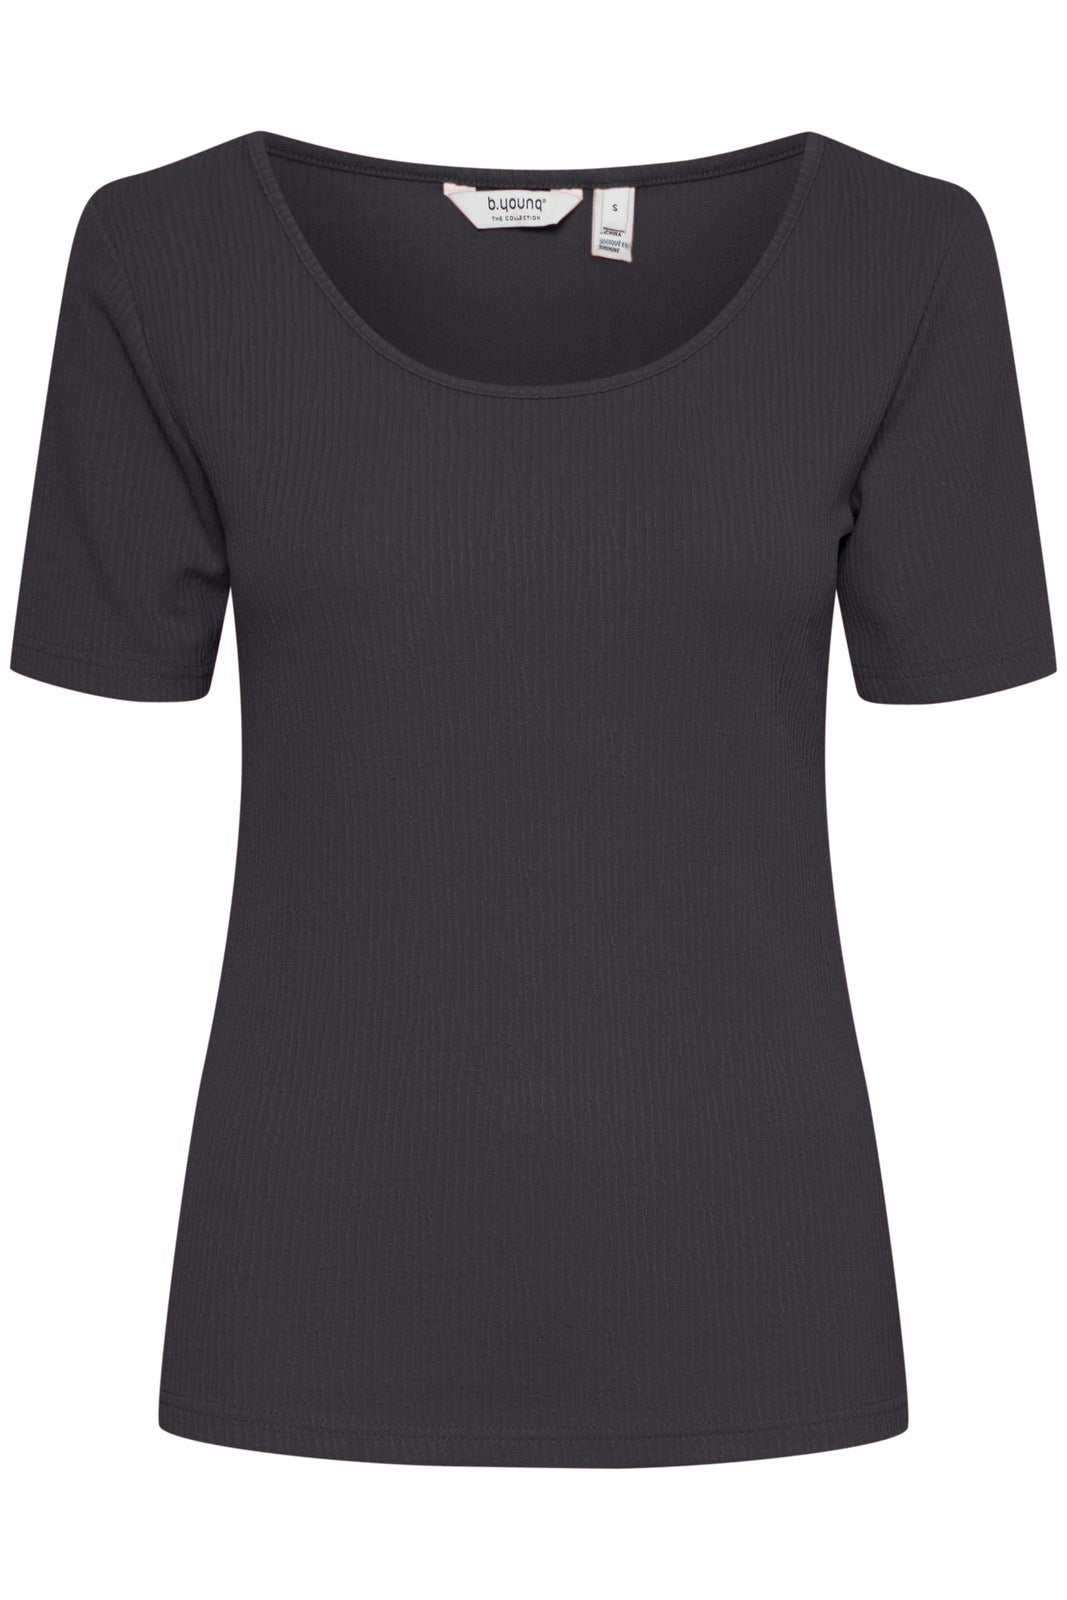 B.young Rimanila T-Shirt - Black 1 Shaws Department Stores